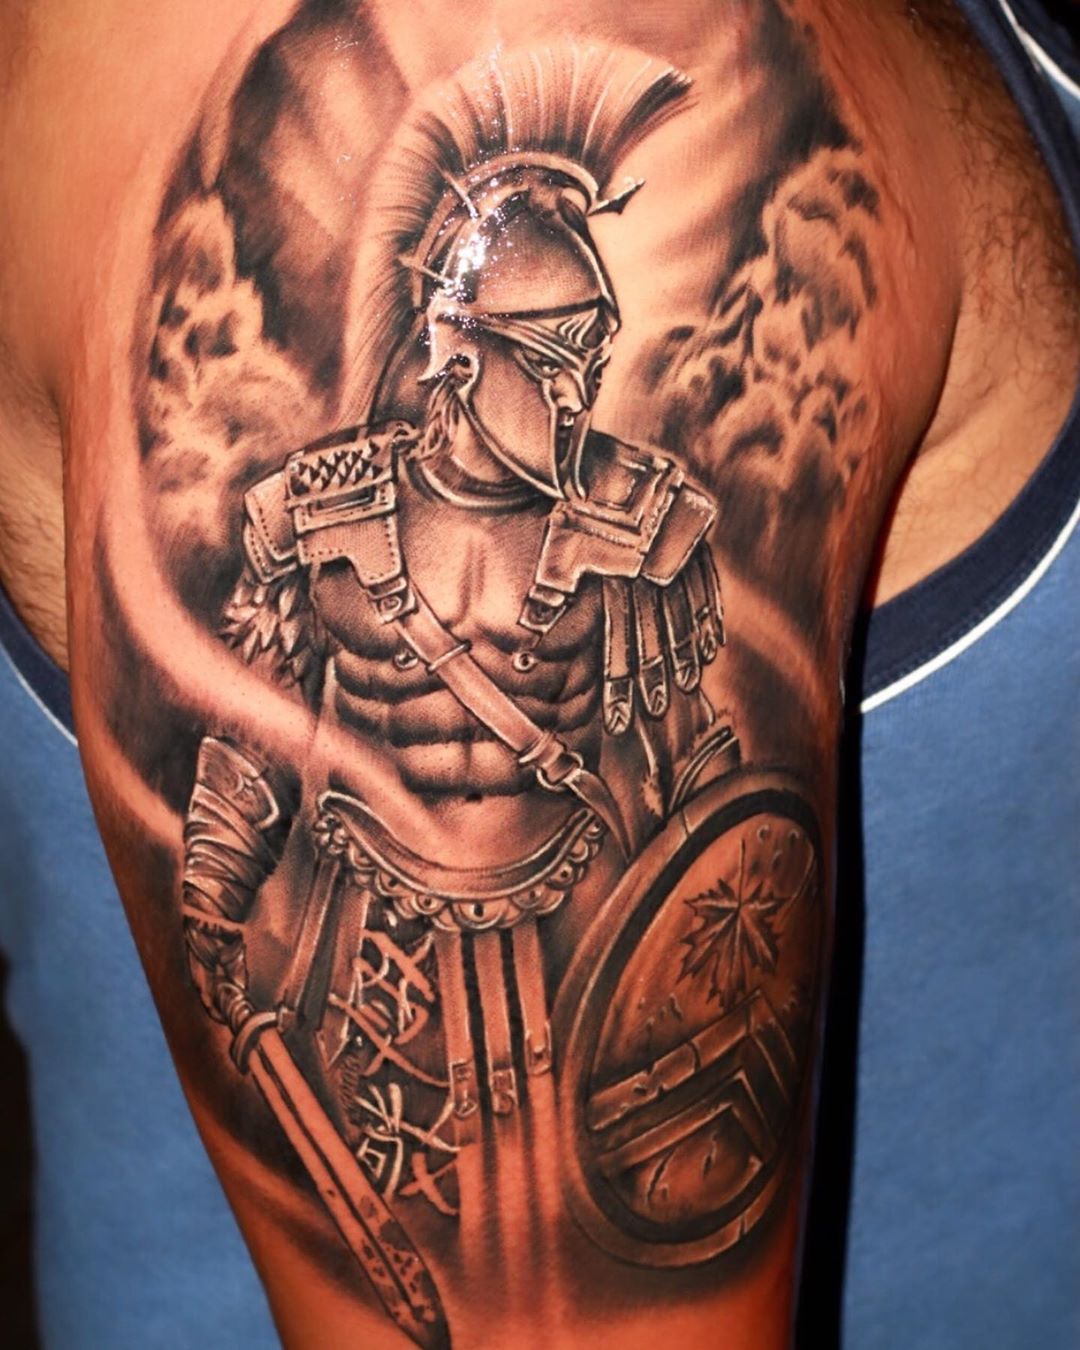 33 gladiator tattoos inspired by medieval warriors   Онлайн блог о тату  IdeasTattoo